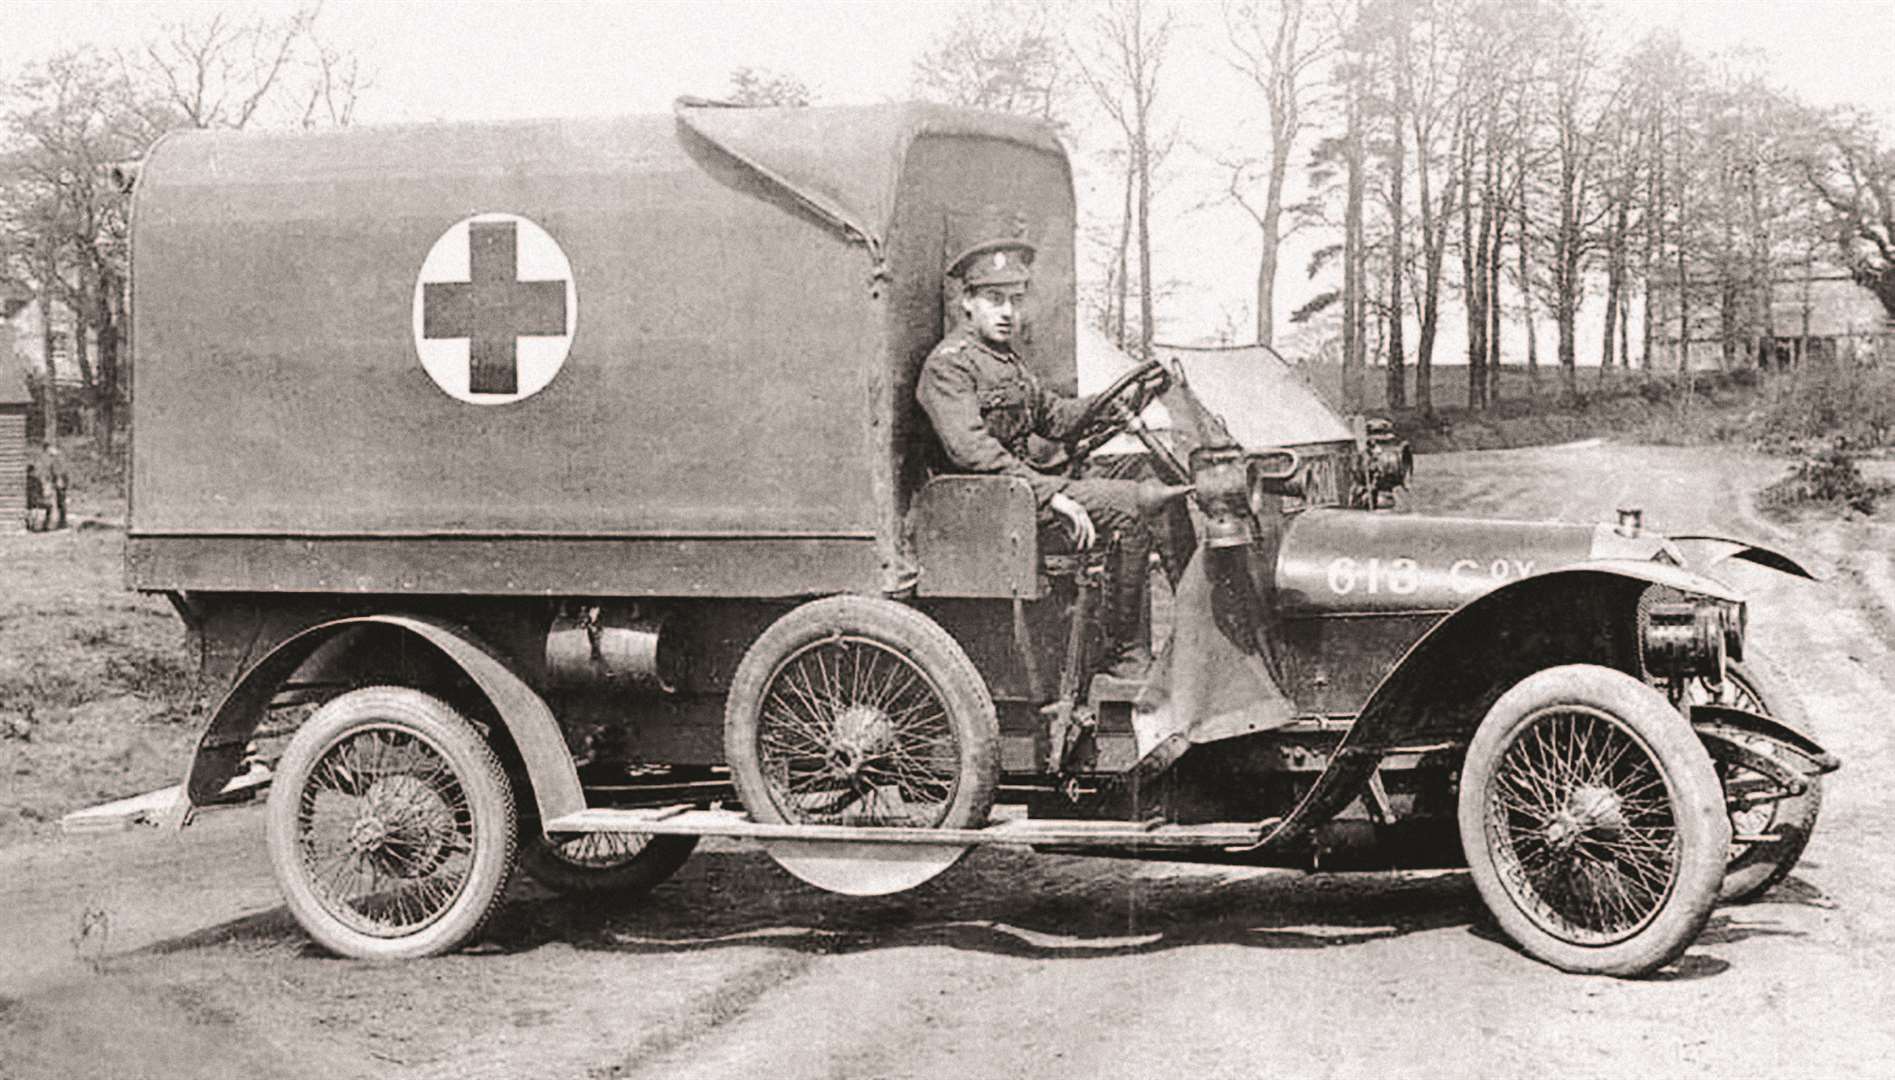 Beadles built ambulances during the Great War